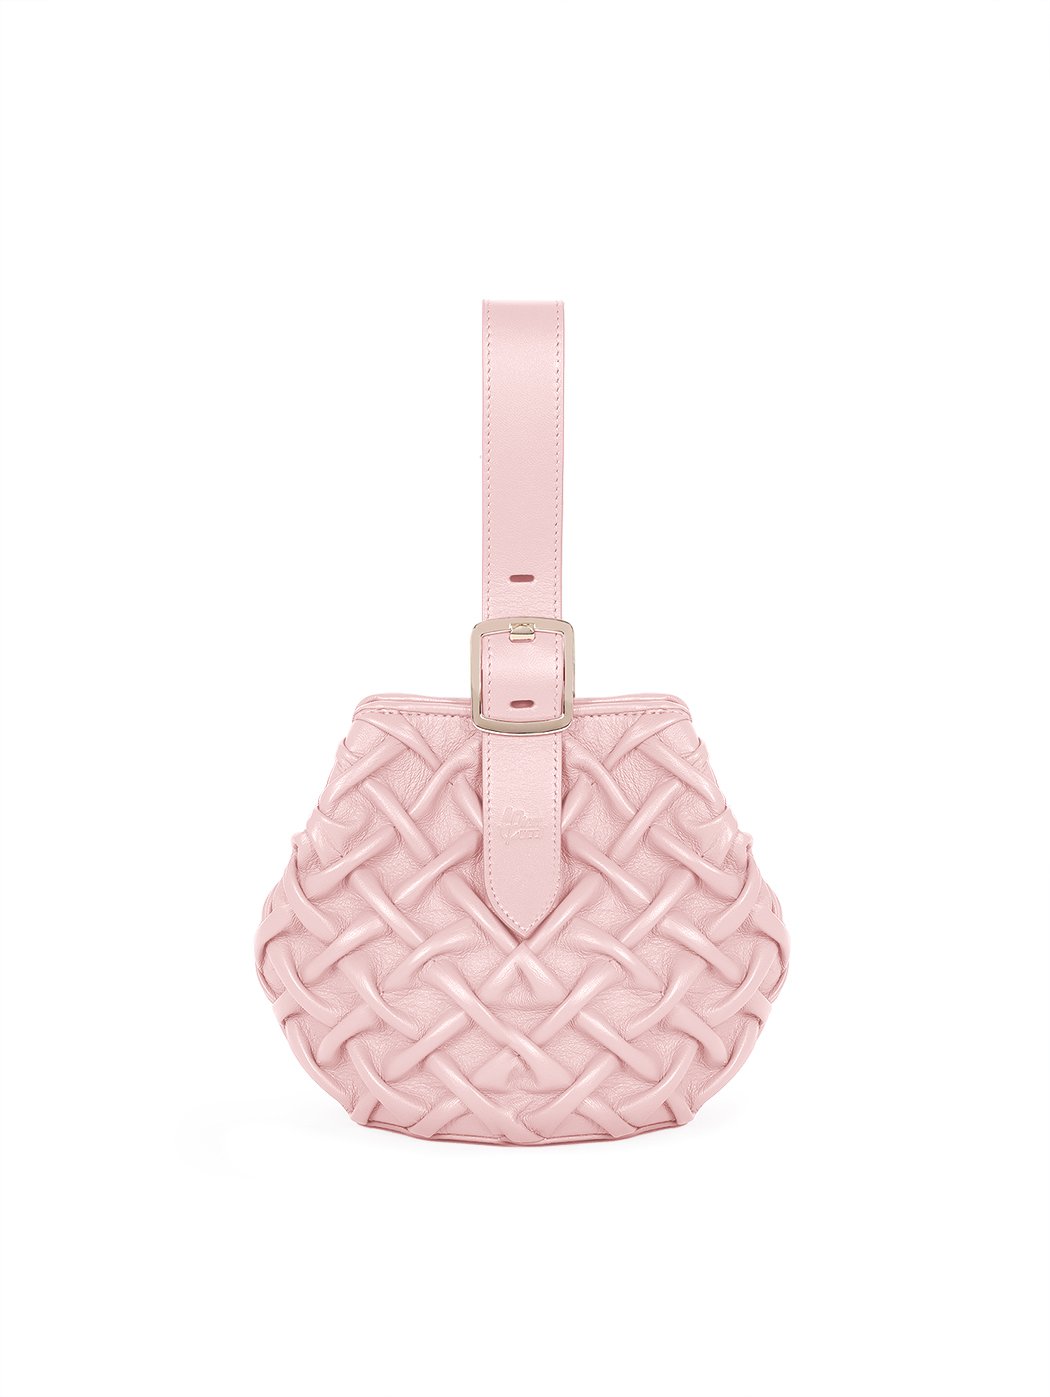 Плиссированная мини сумочка bucket коллекции Poseidon розового цвета